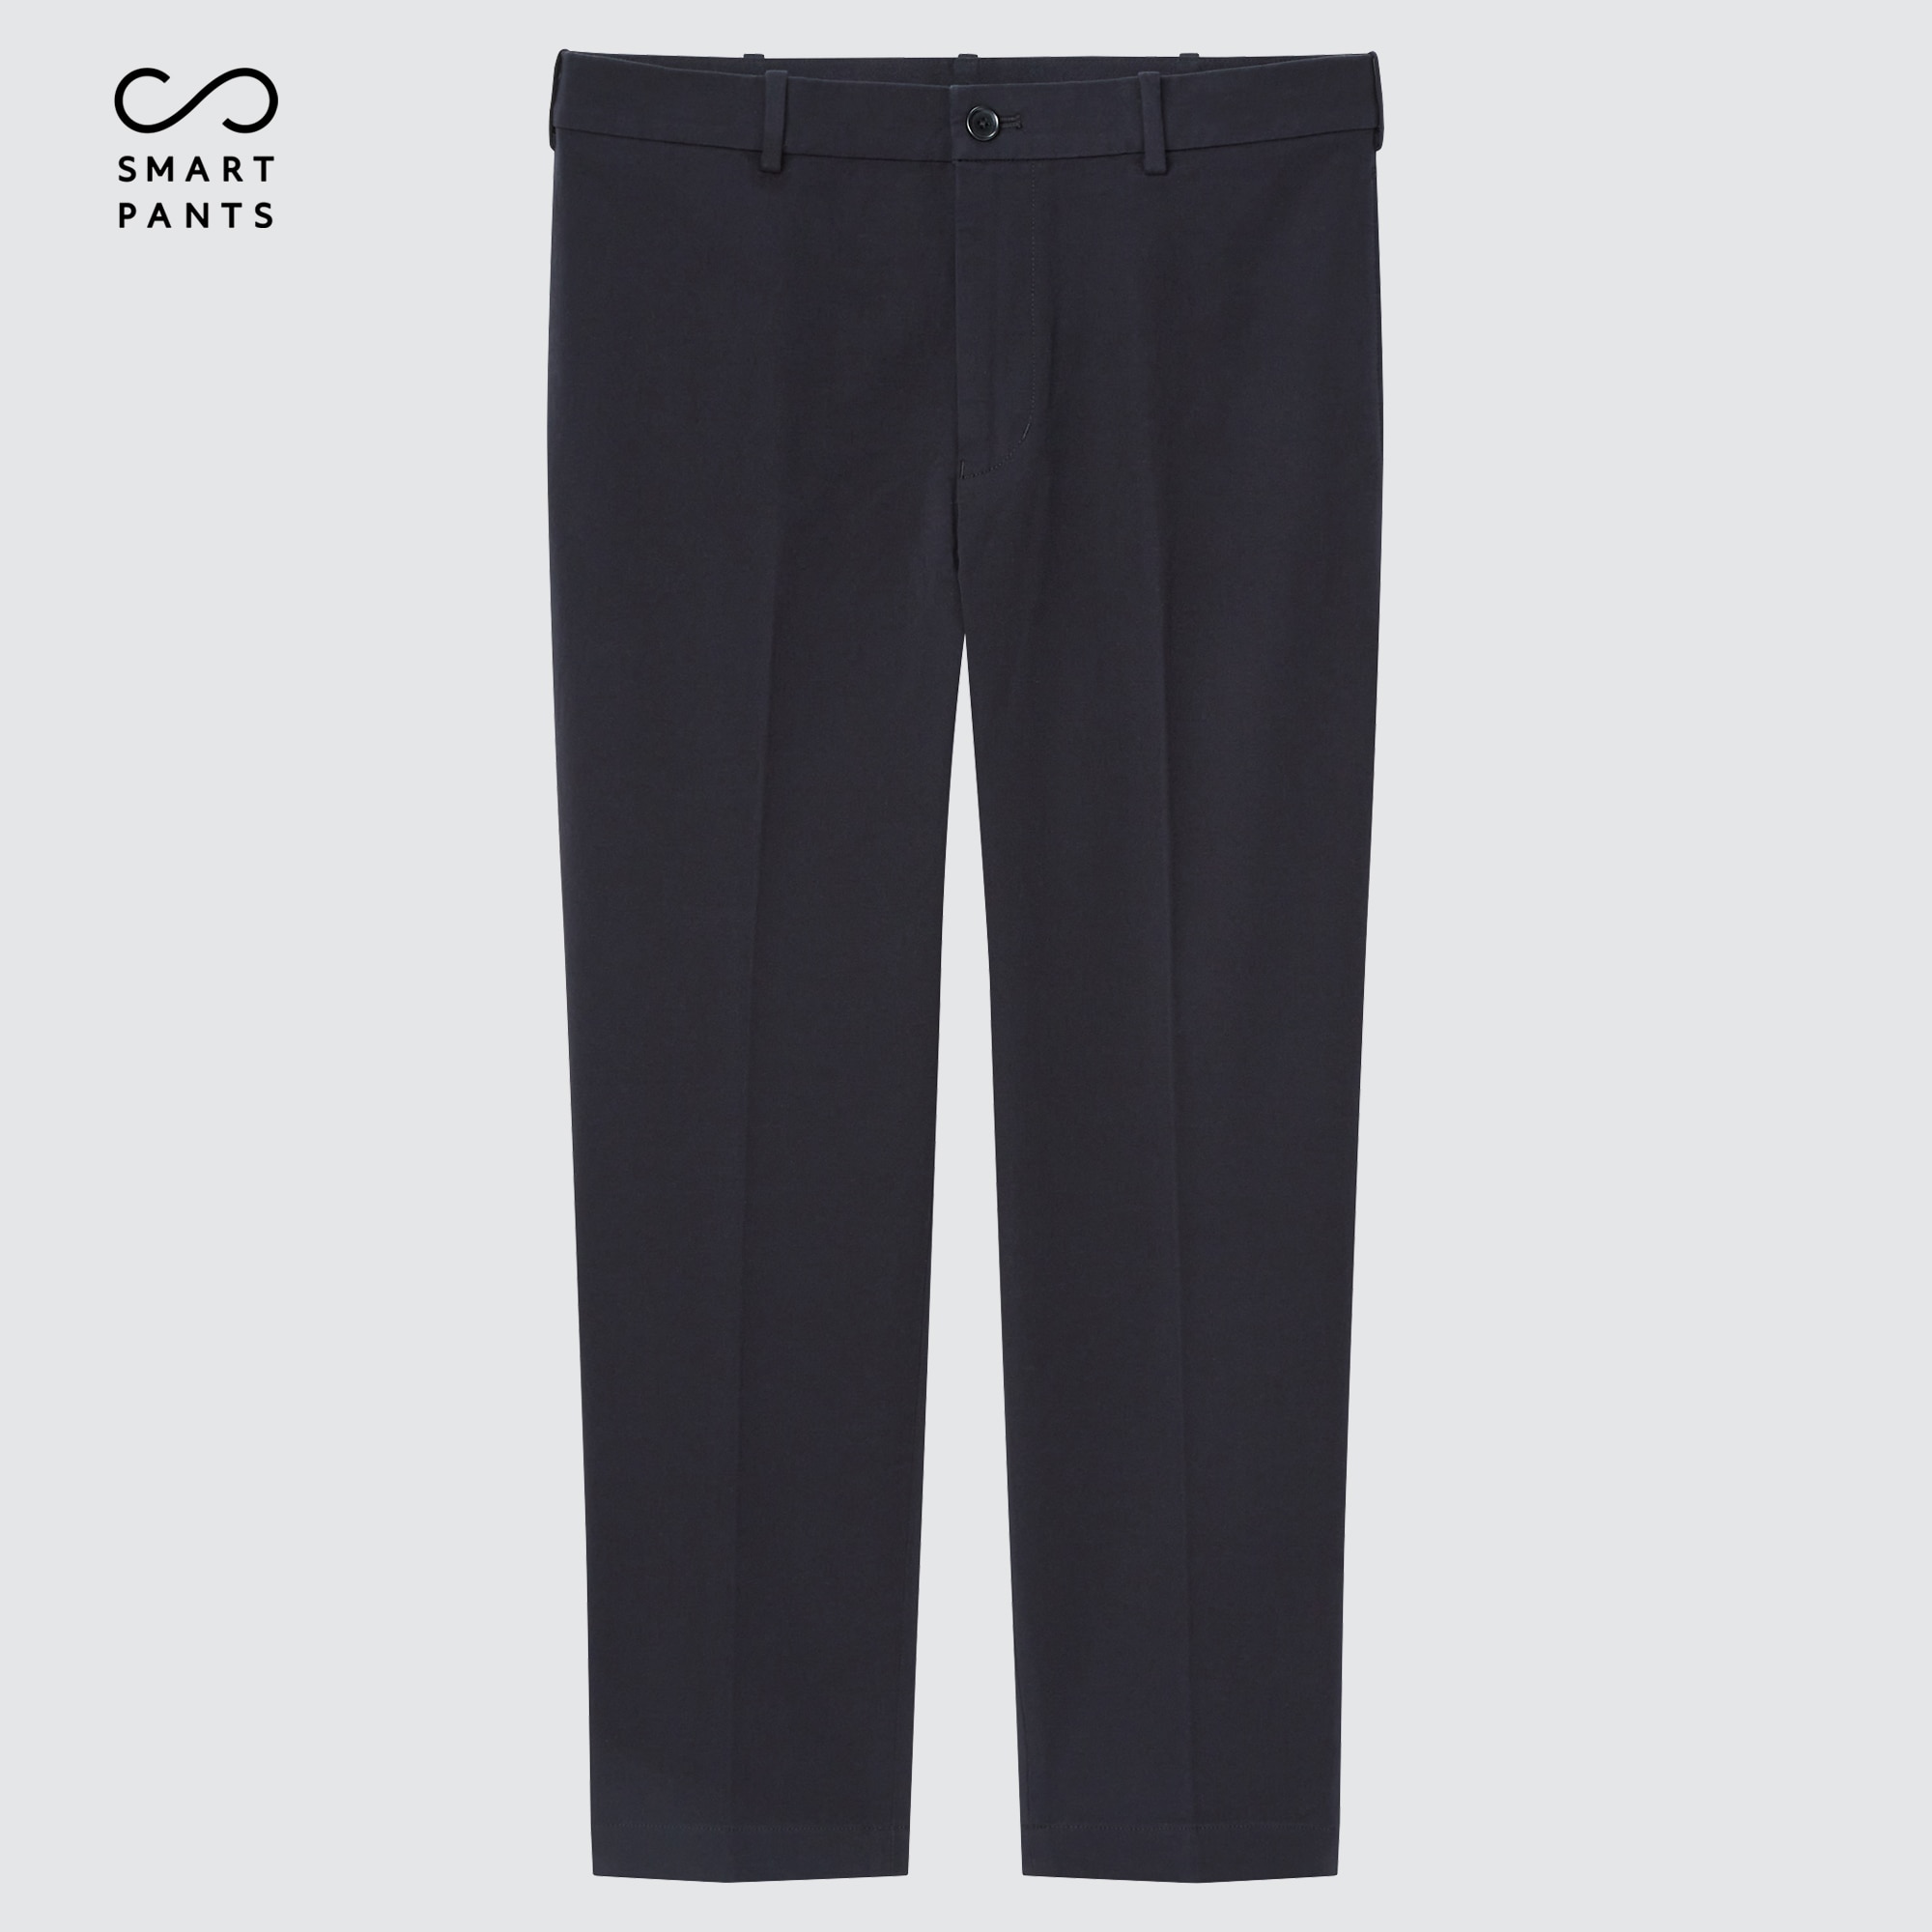 Sympli Narrow Pants Short Style 2748S, 25